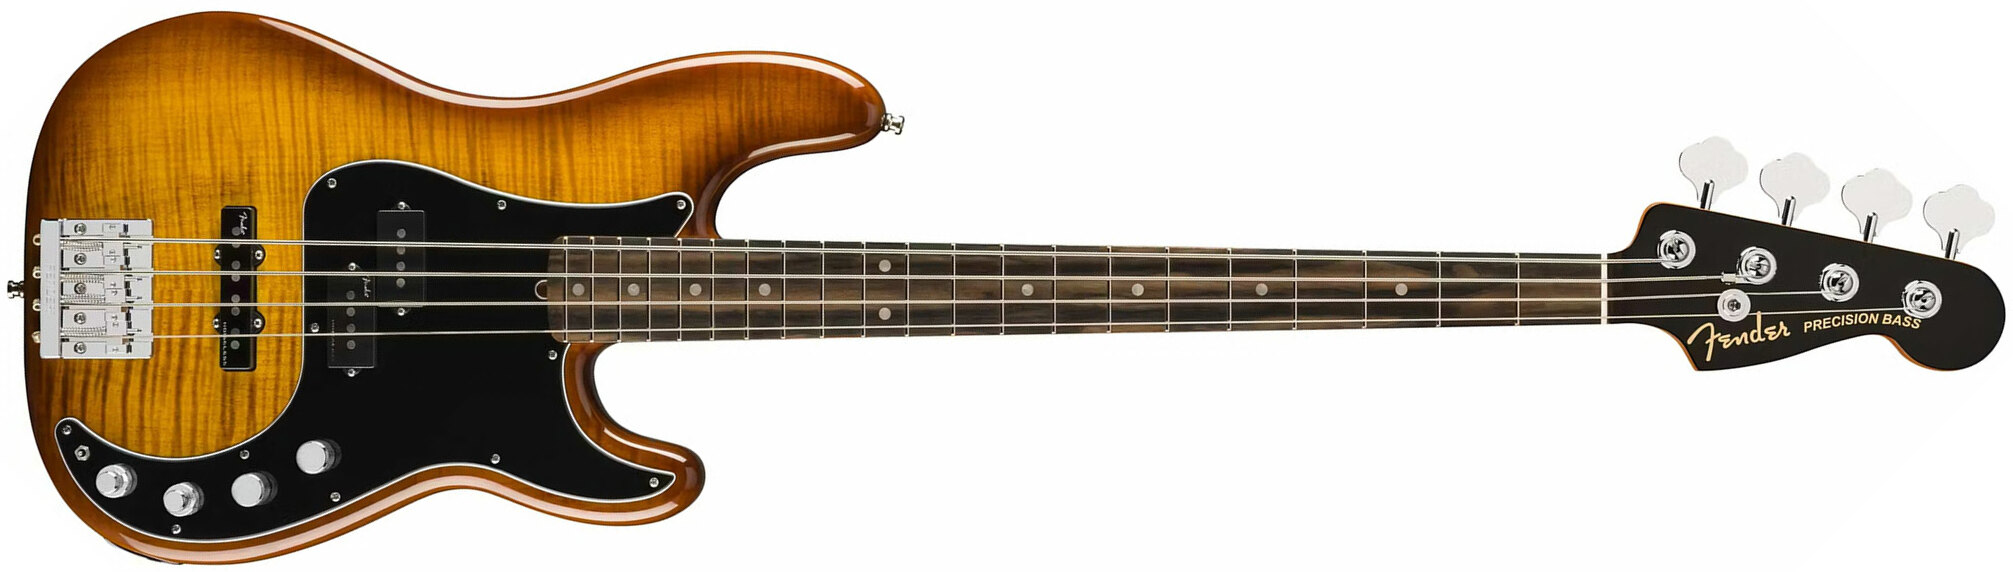 Fender Precision Bass American Ultra Usa Ltd Eb - Tiger's Eye - Solid body elektrische bas - Main picture